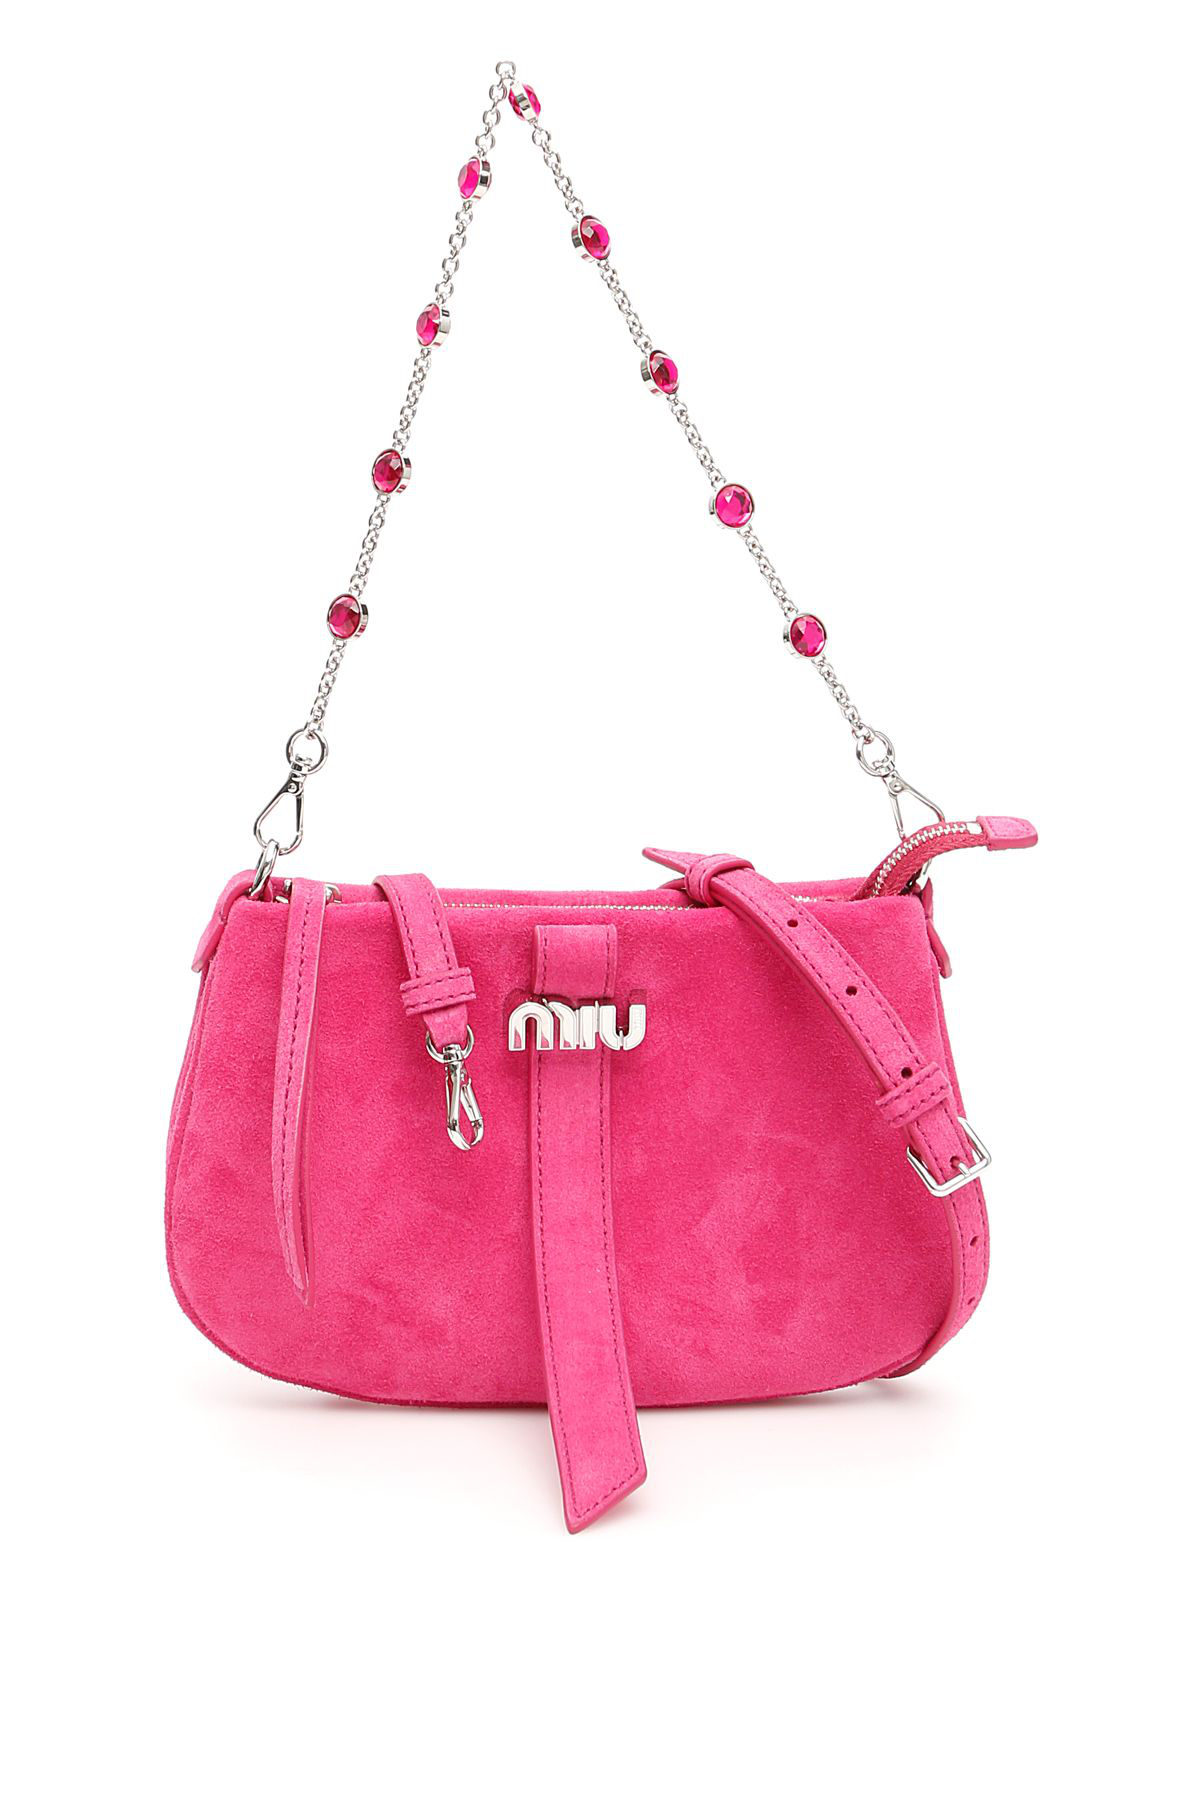 Miu Miu Crystal Chain Bag In Fuxia (pink) | ModeSens